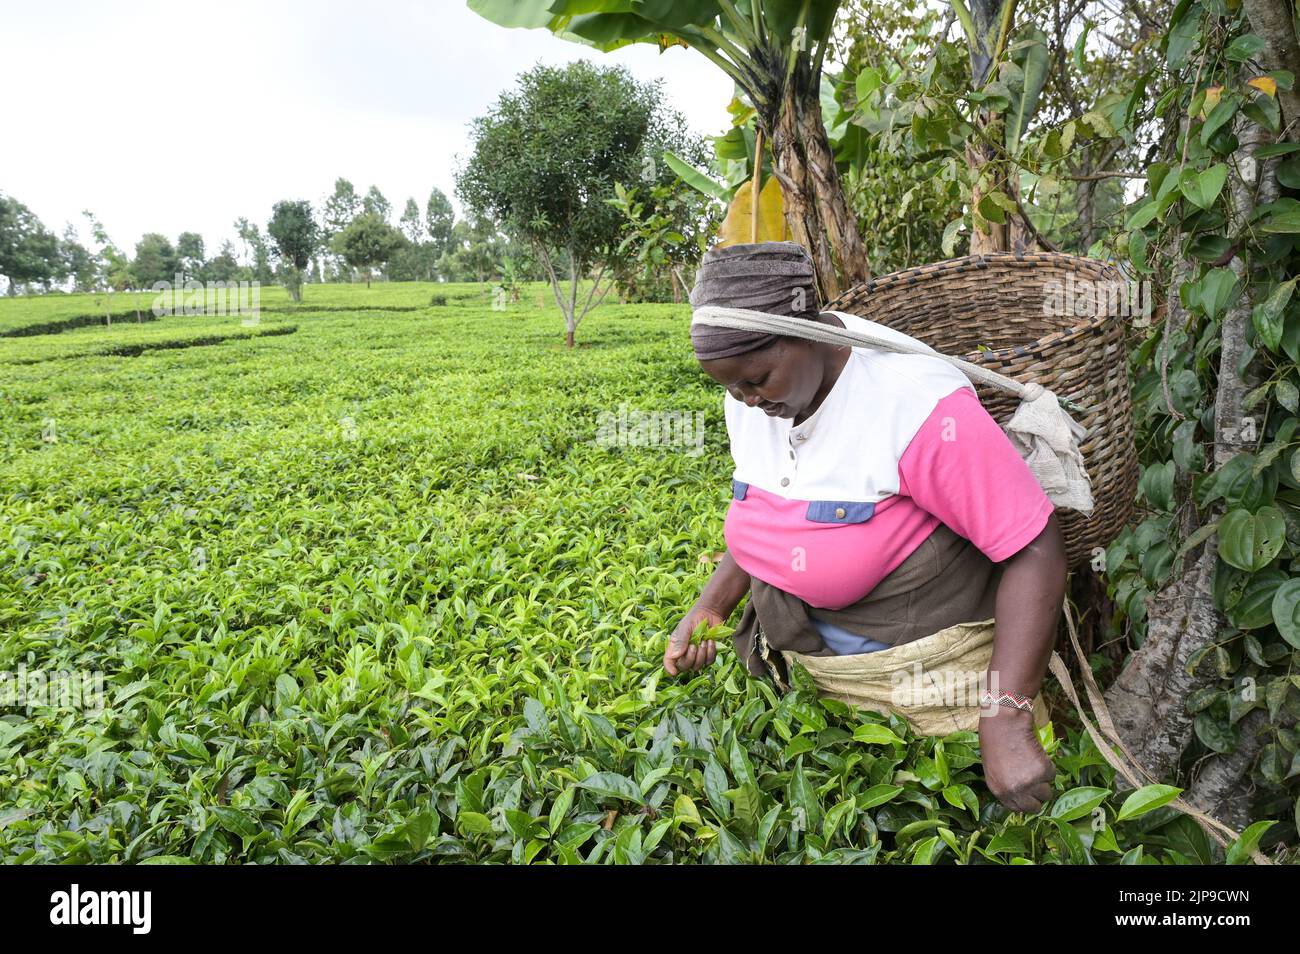 KENYA, Kimunye, piantagione di tè, le donne raccolse le foglie di tè a mano / KENIA, Kimunye, Teegarten, Frauen pflücken Teeblätter Foto Stock